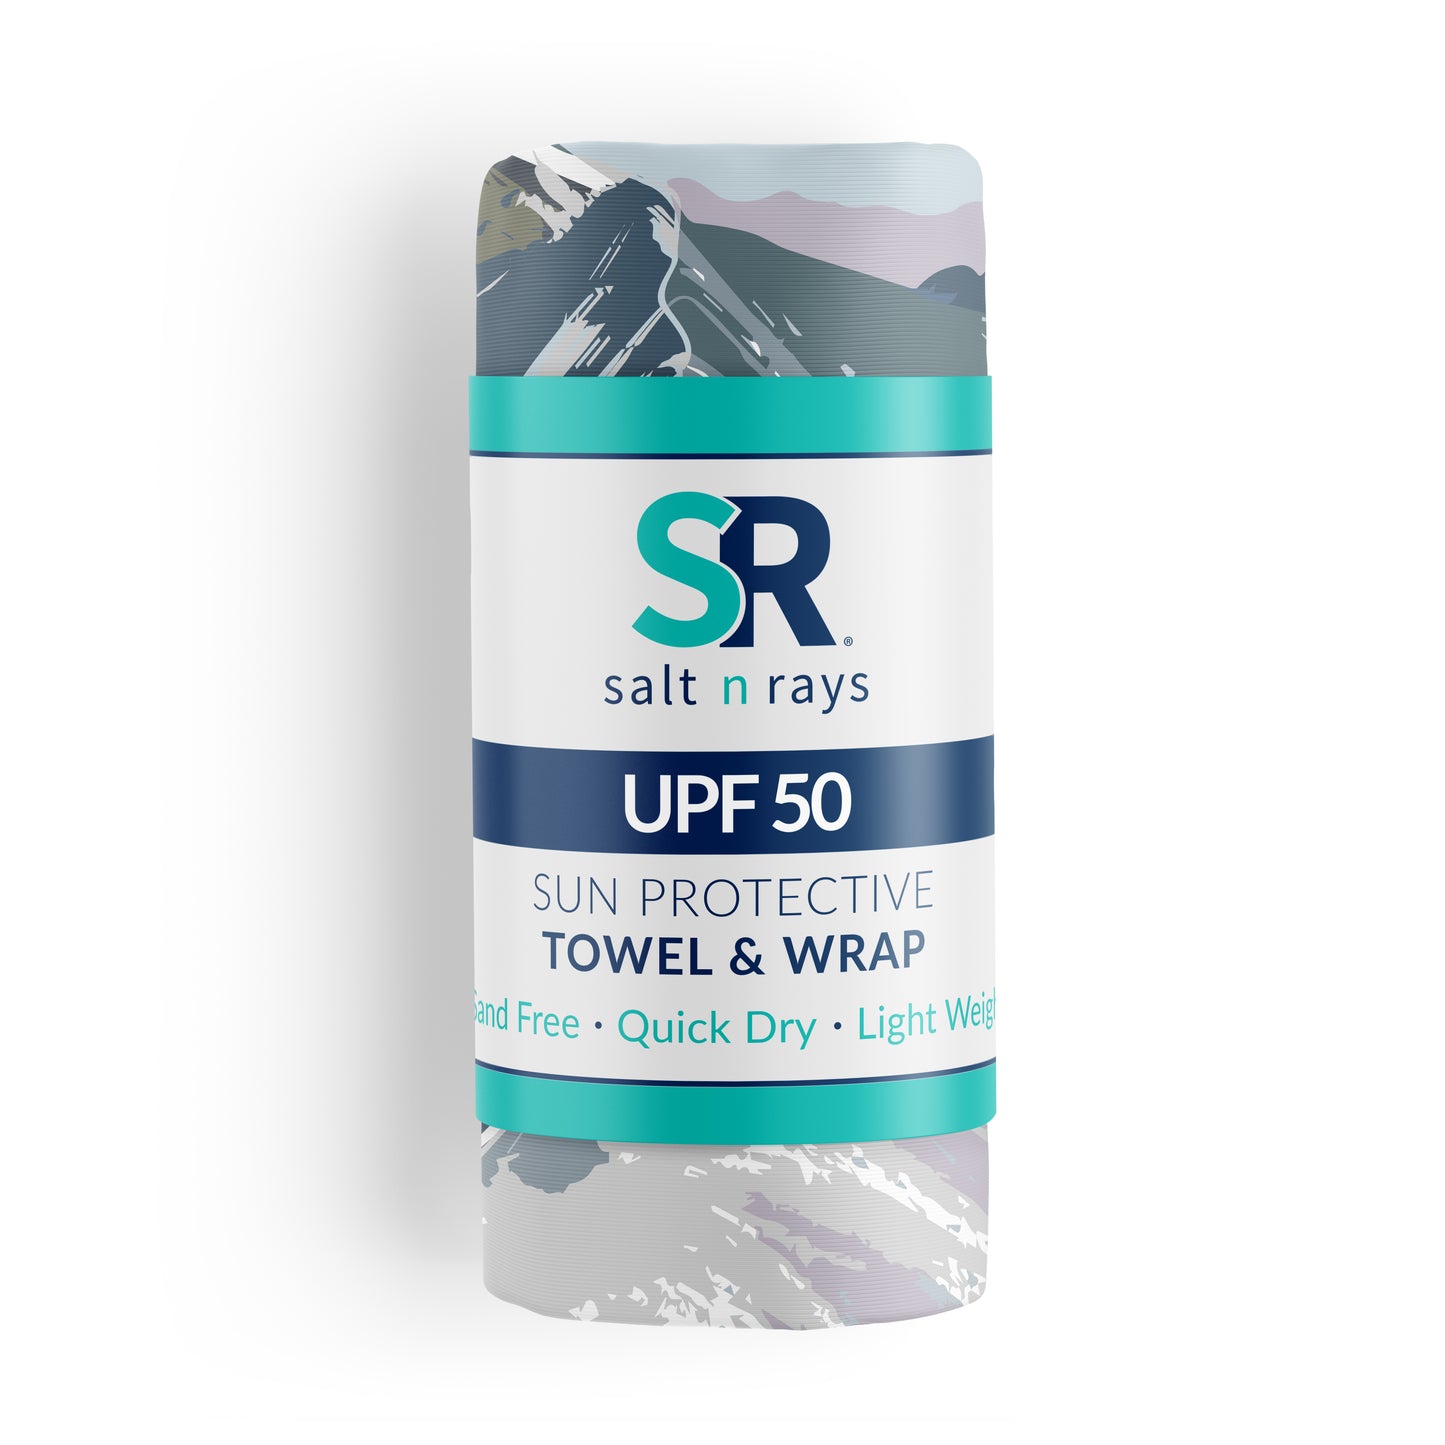 UPF 50 Sol Towel/Wrap - Journey